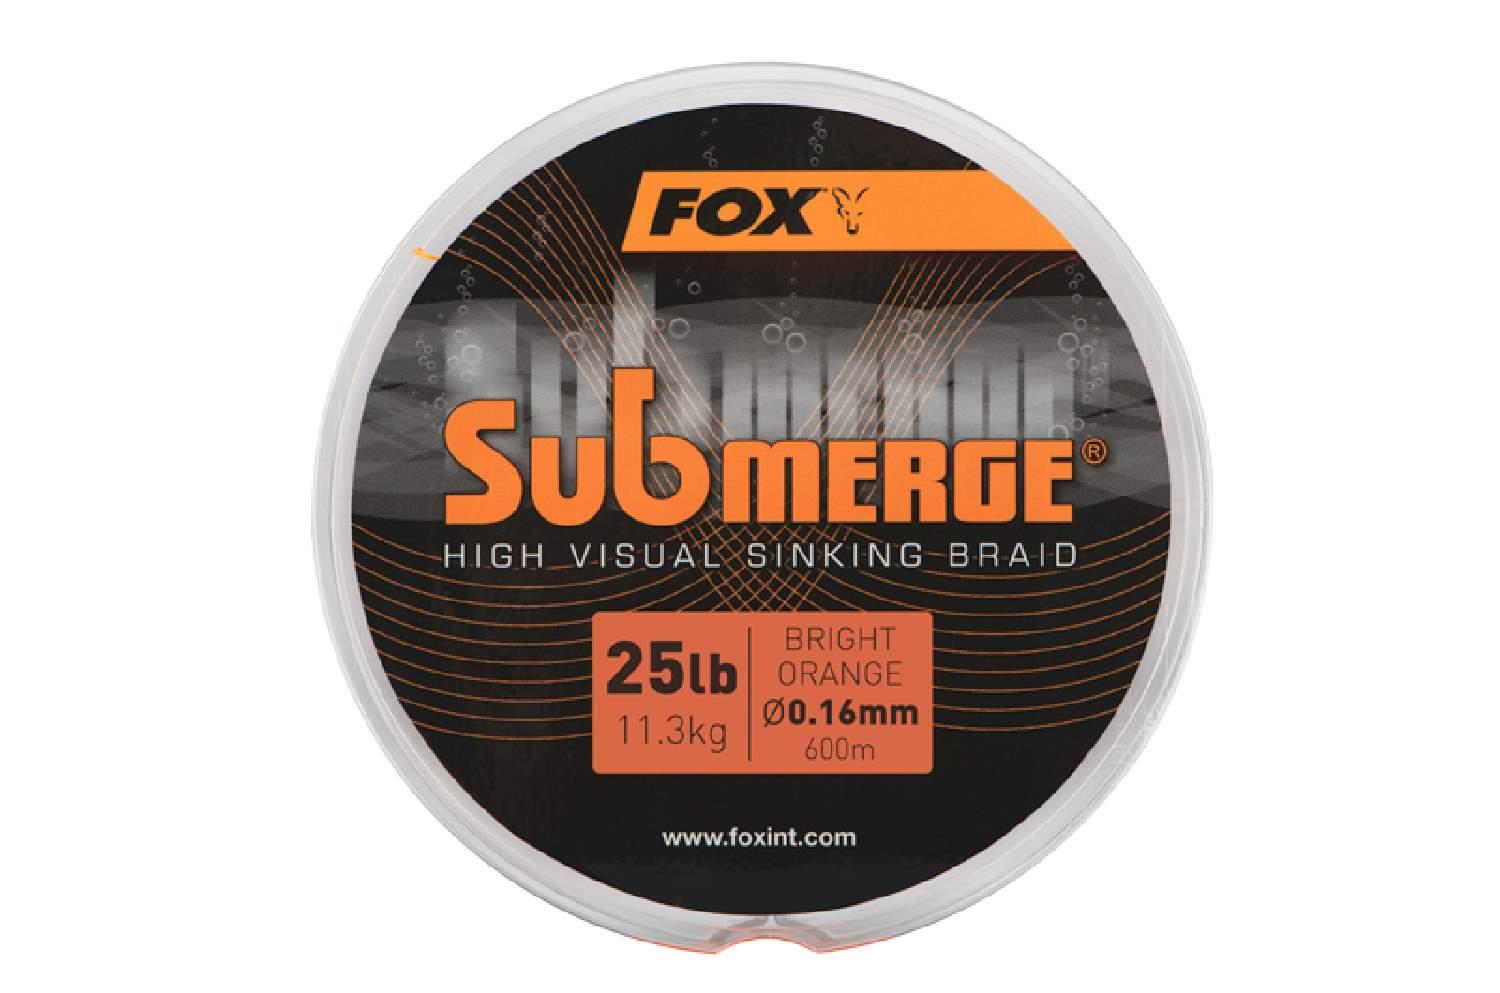 Fox Submerge High Visual Sinking Braid 600m Orange